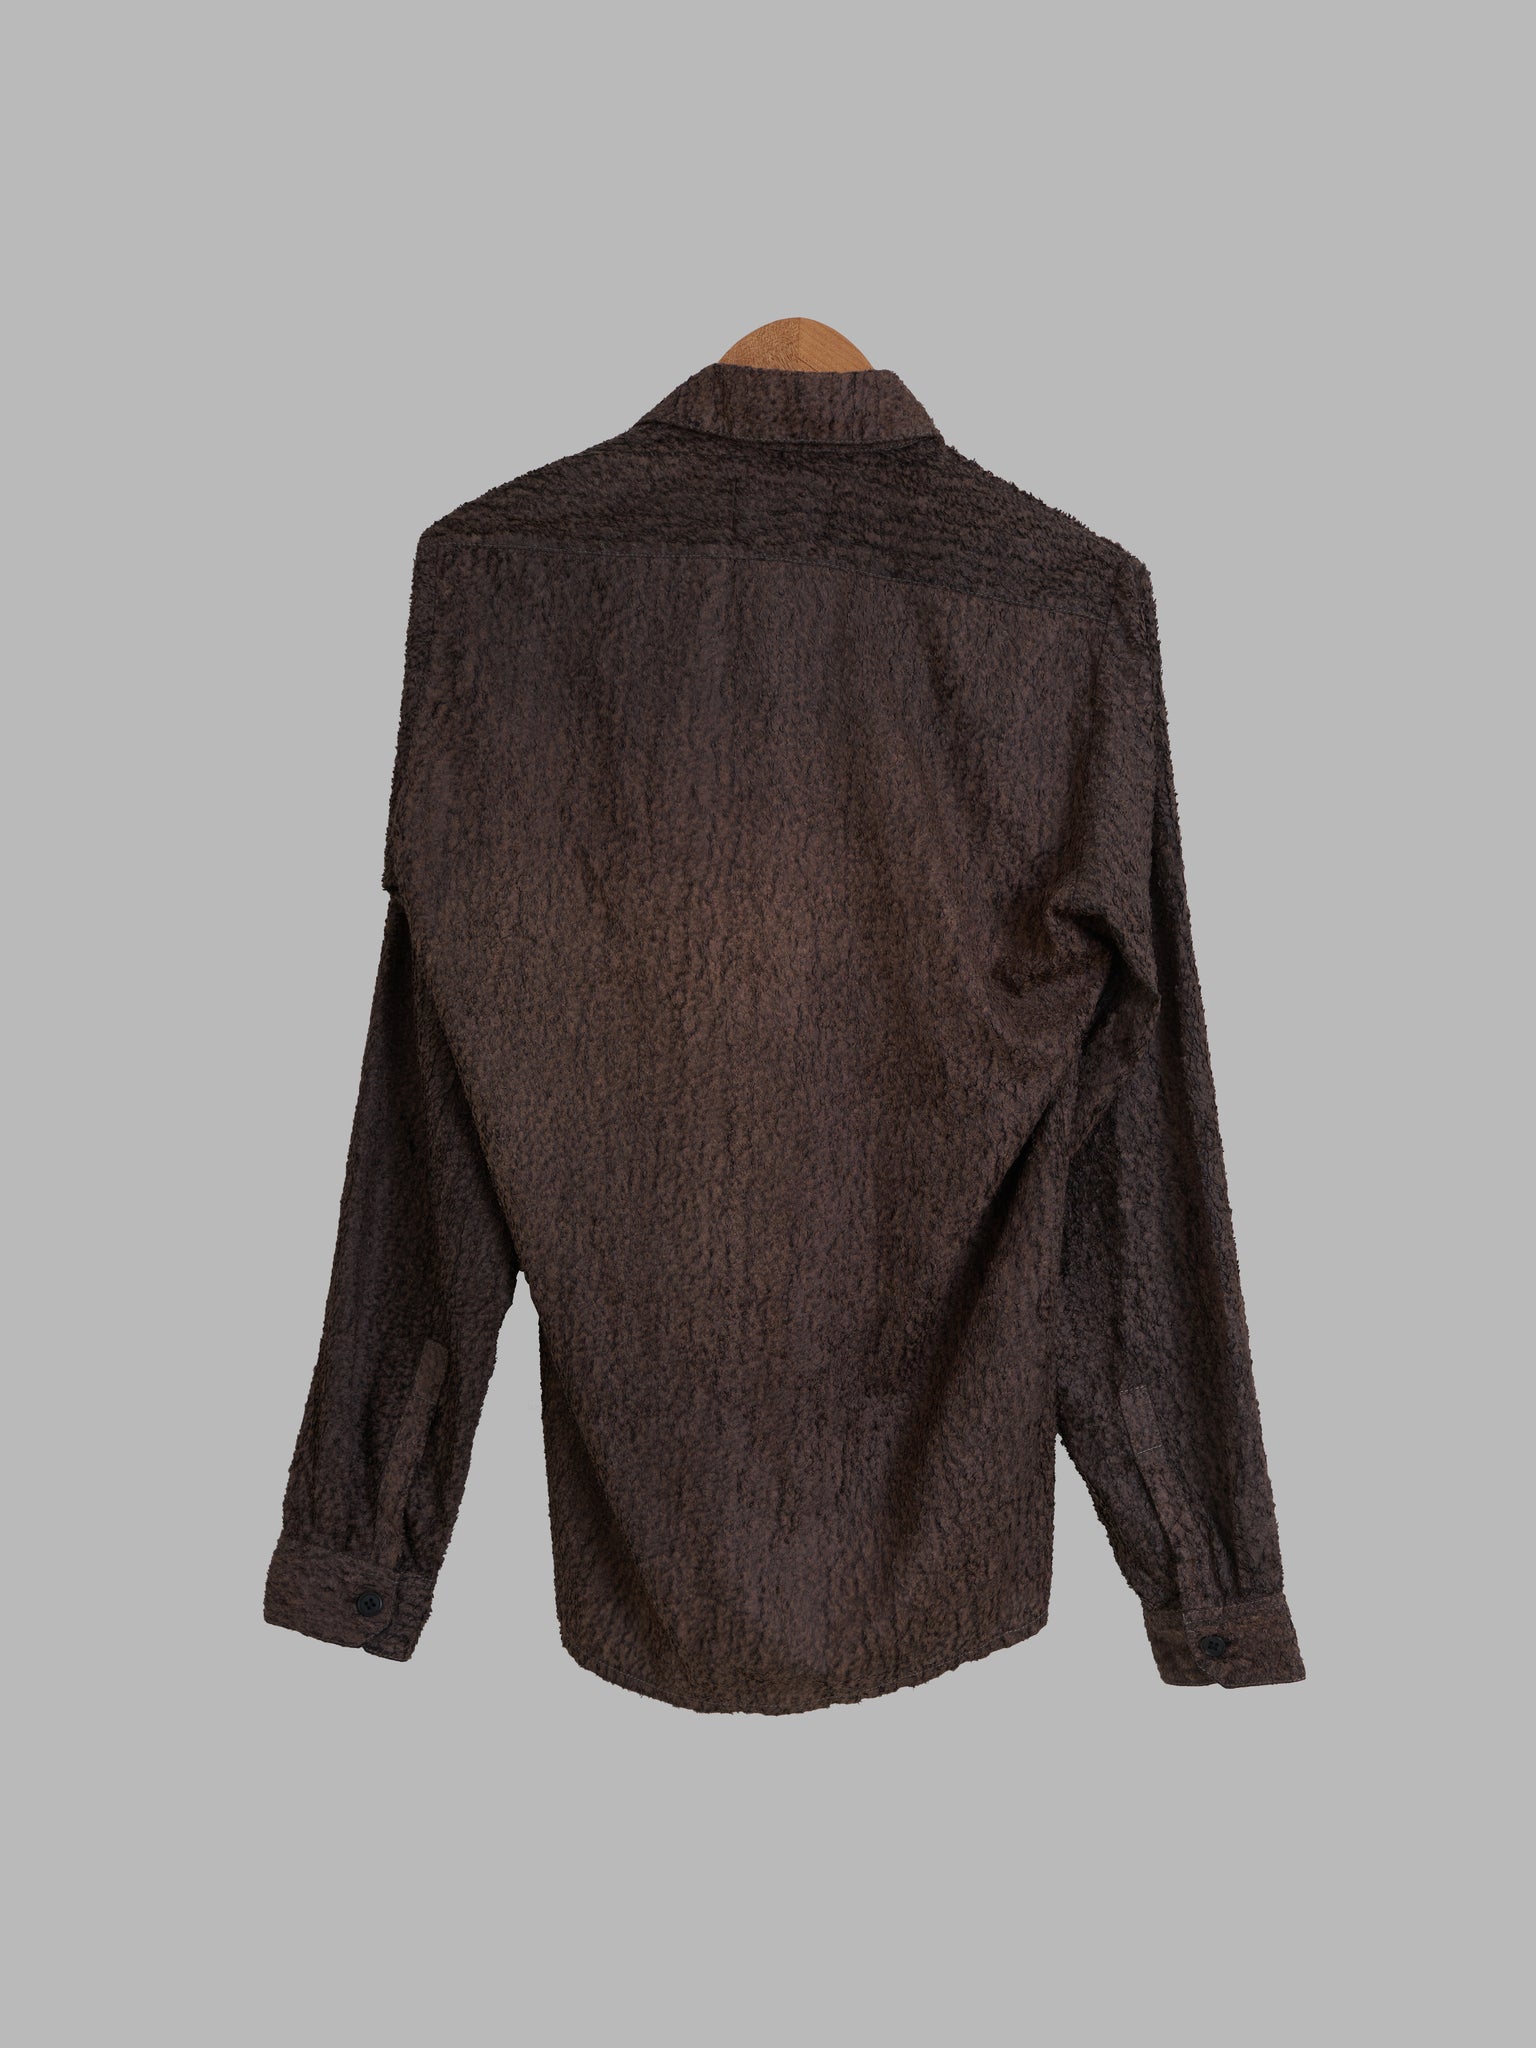 Yoshiki Hishinuma Homme brown polyester scaly long sleeve shirt - size 1 S